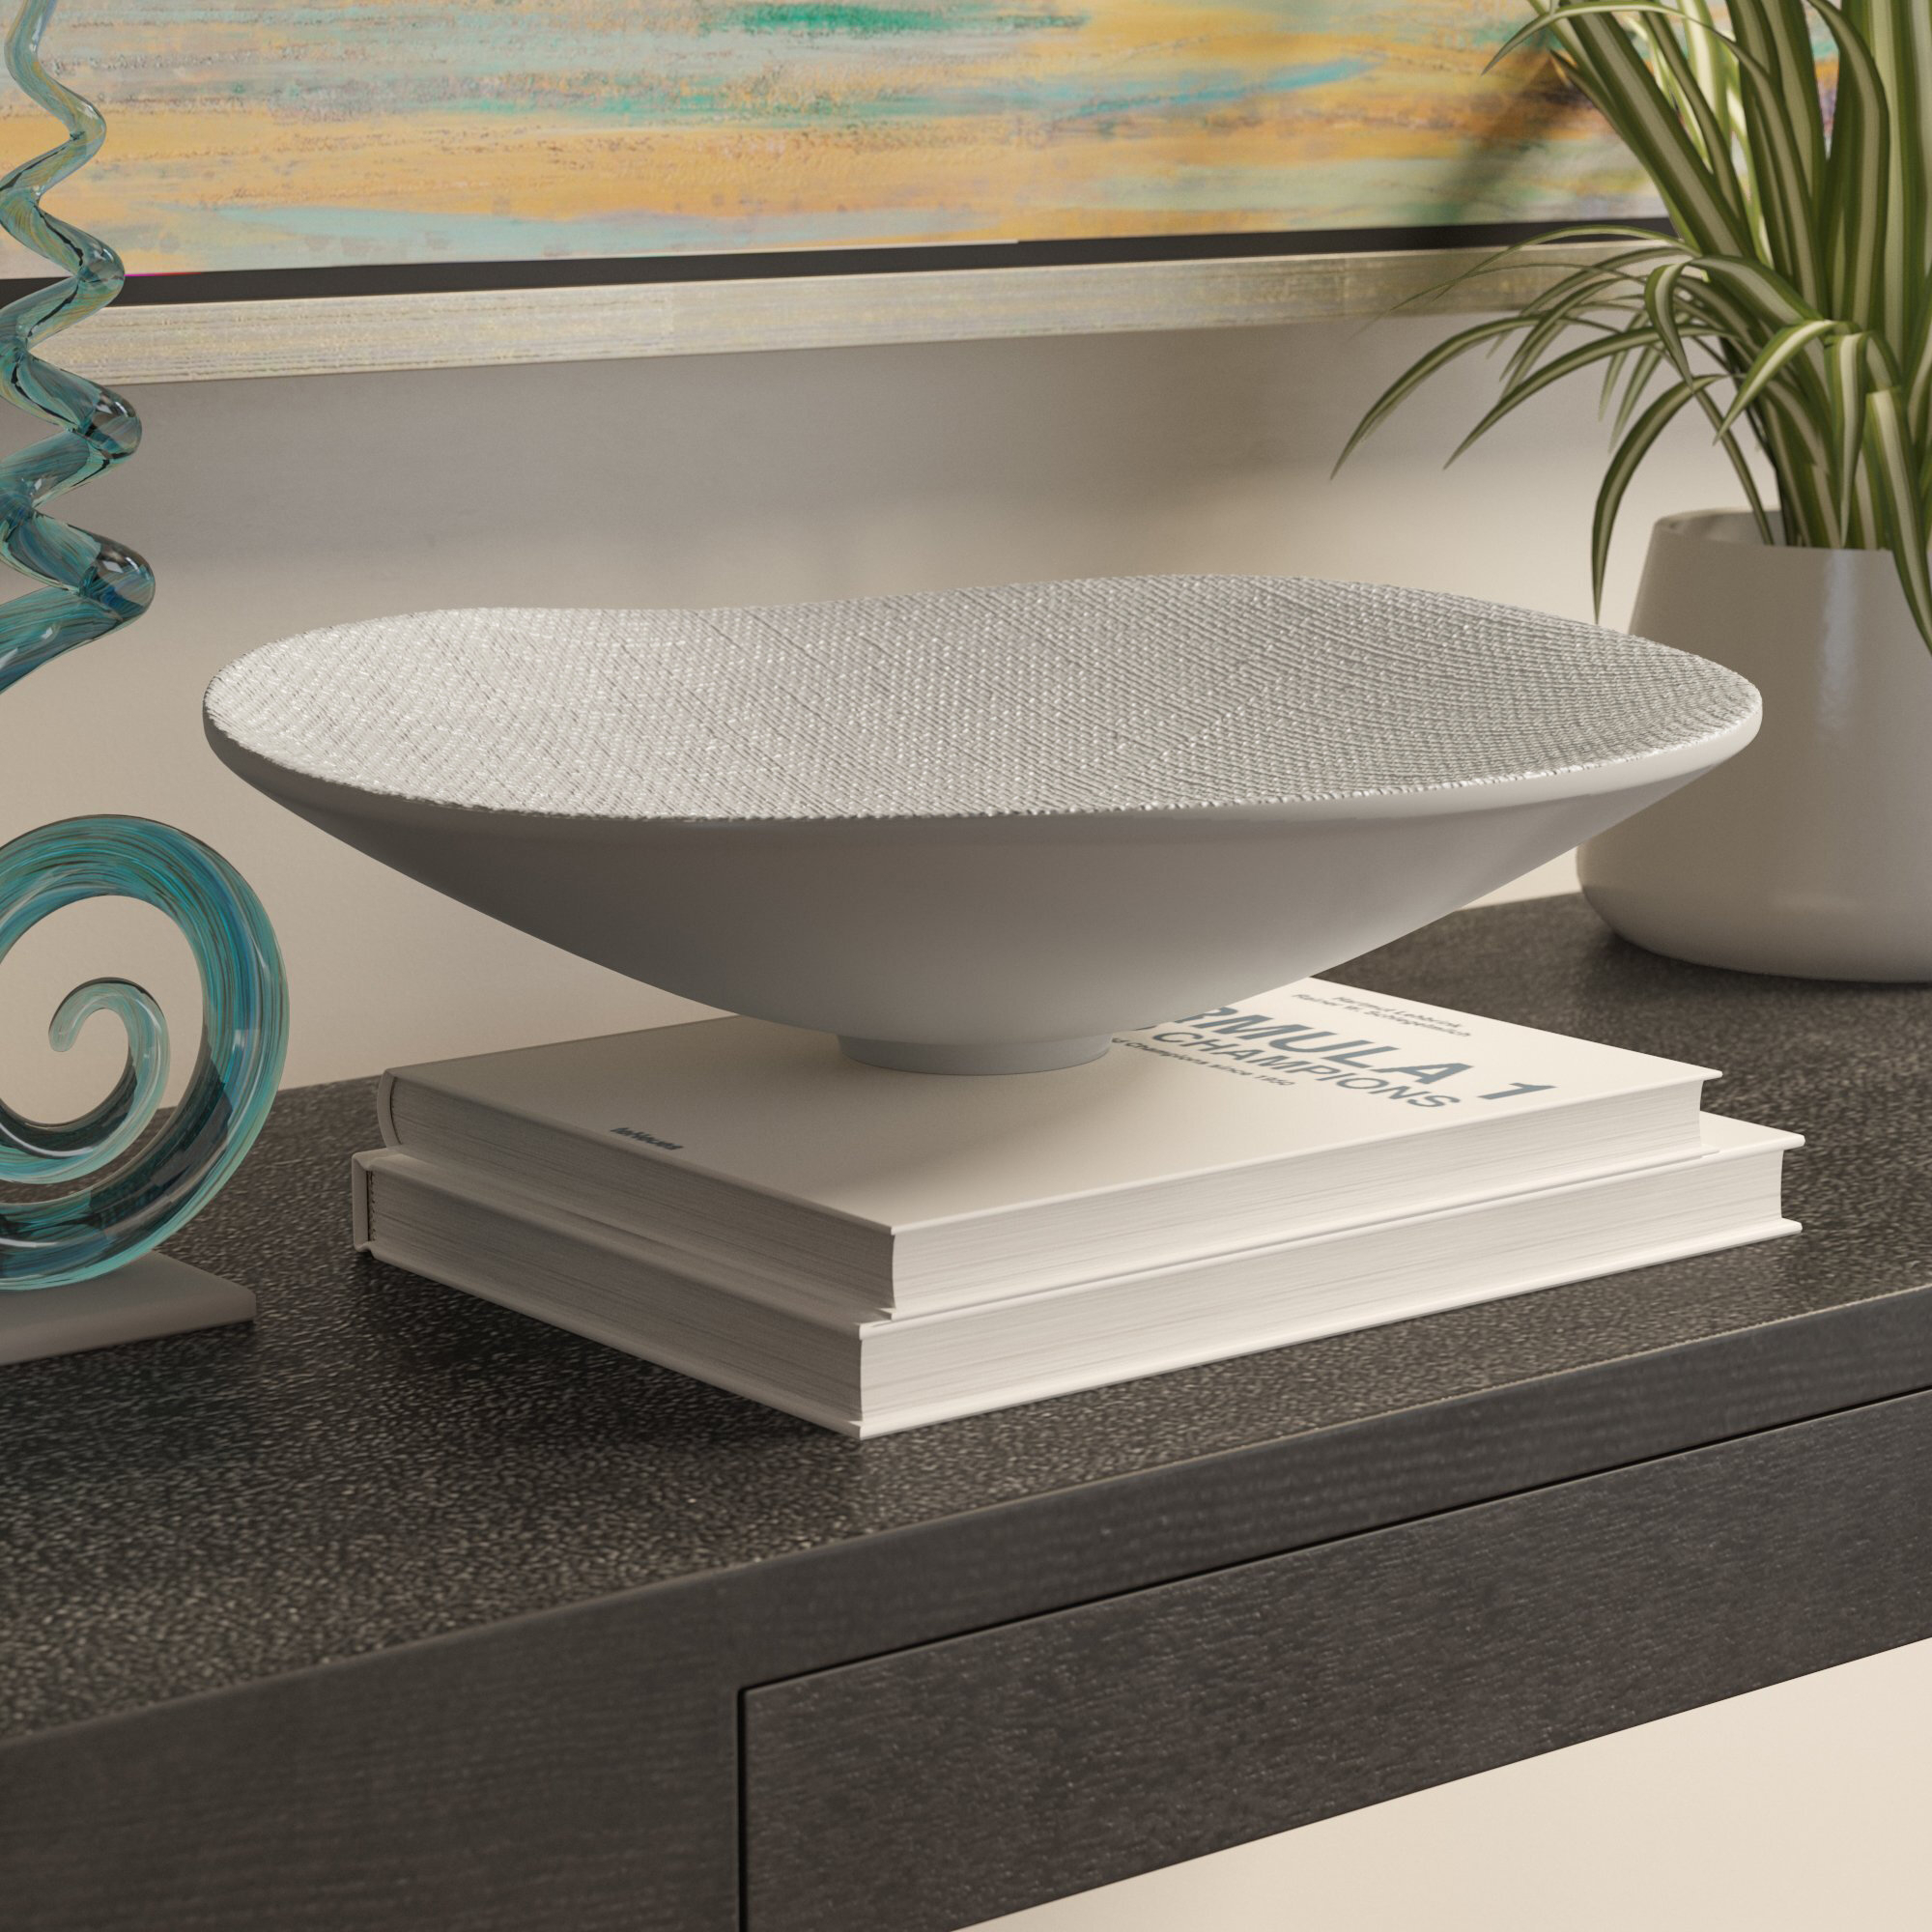 https://visualhunt.com/photos/title/3-expert-tips-to-choose-a-decorative-bowl.jpg